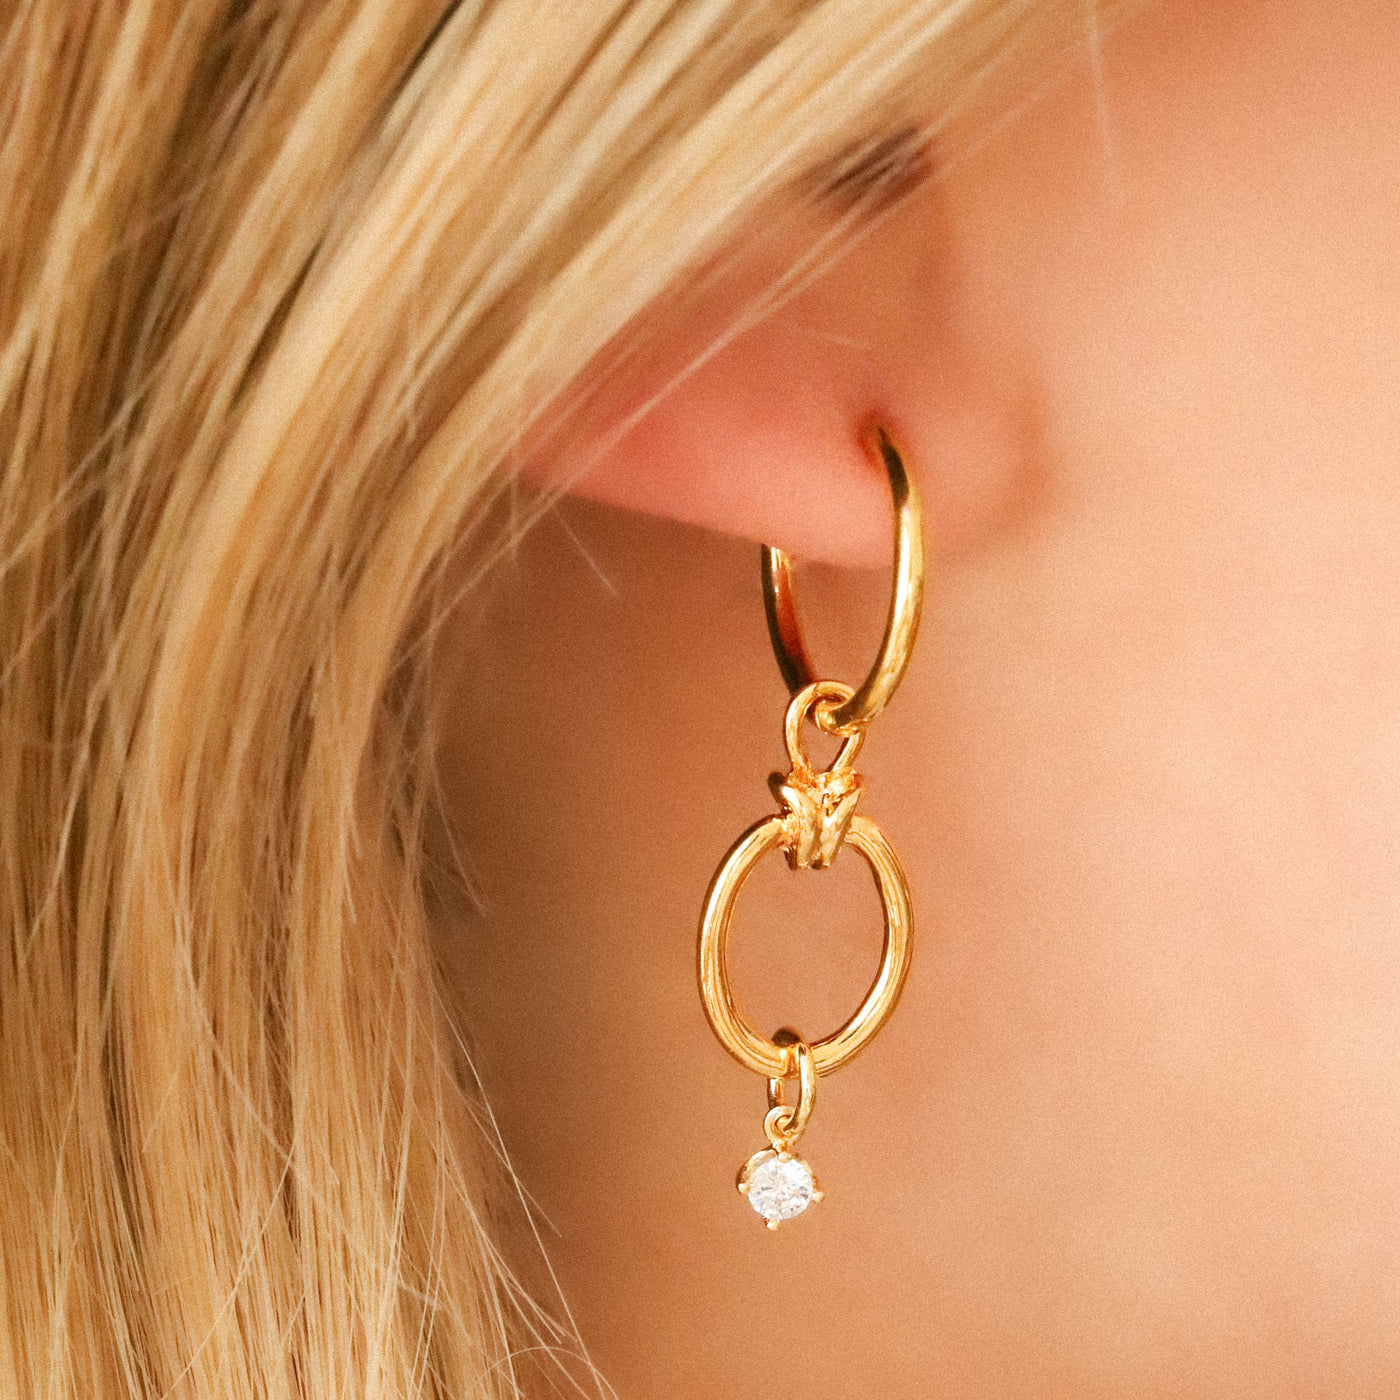 Gold statement earrings